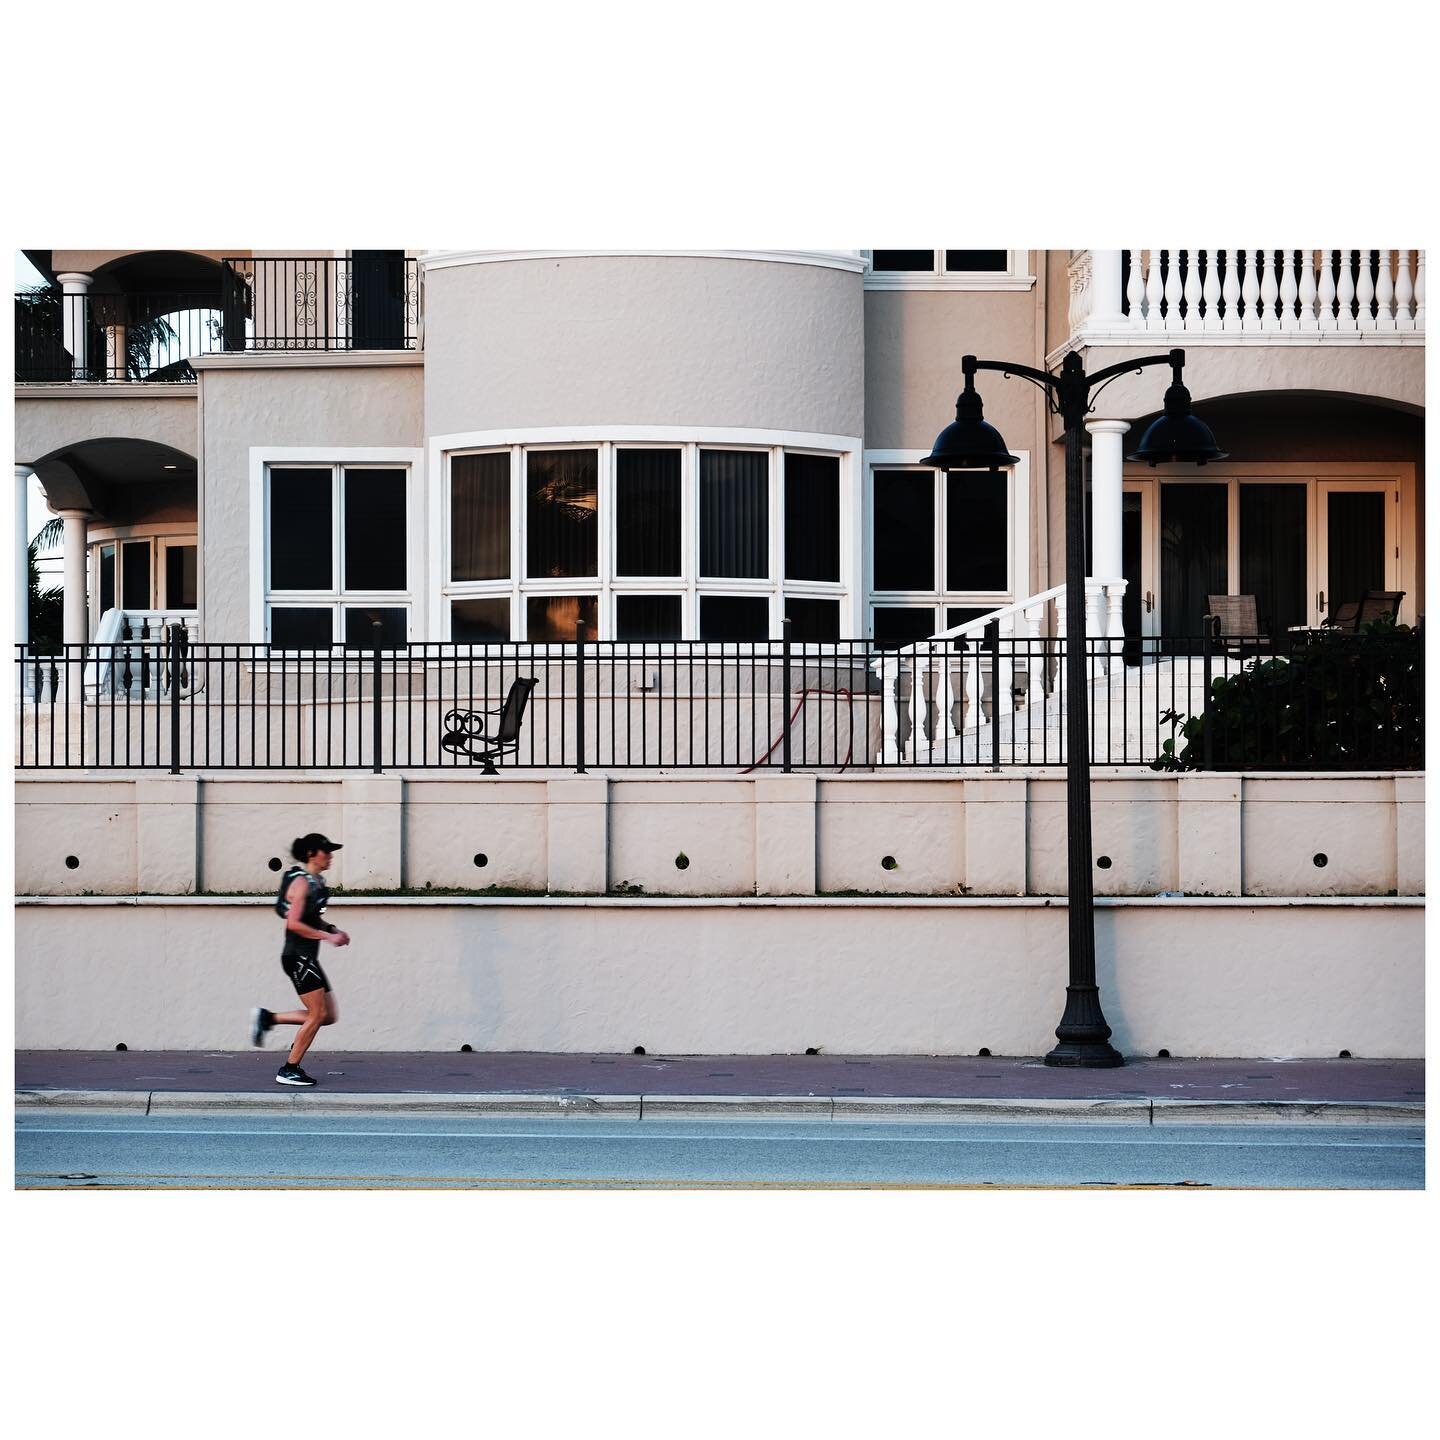 runner 
.
.
.
.
#runner #running #beach #street #ftlauderdale #streetphotography #Fuji #FujiXT4 #XT4 #photography #dailychallenge #digitalphotography #affinityphoto